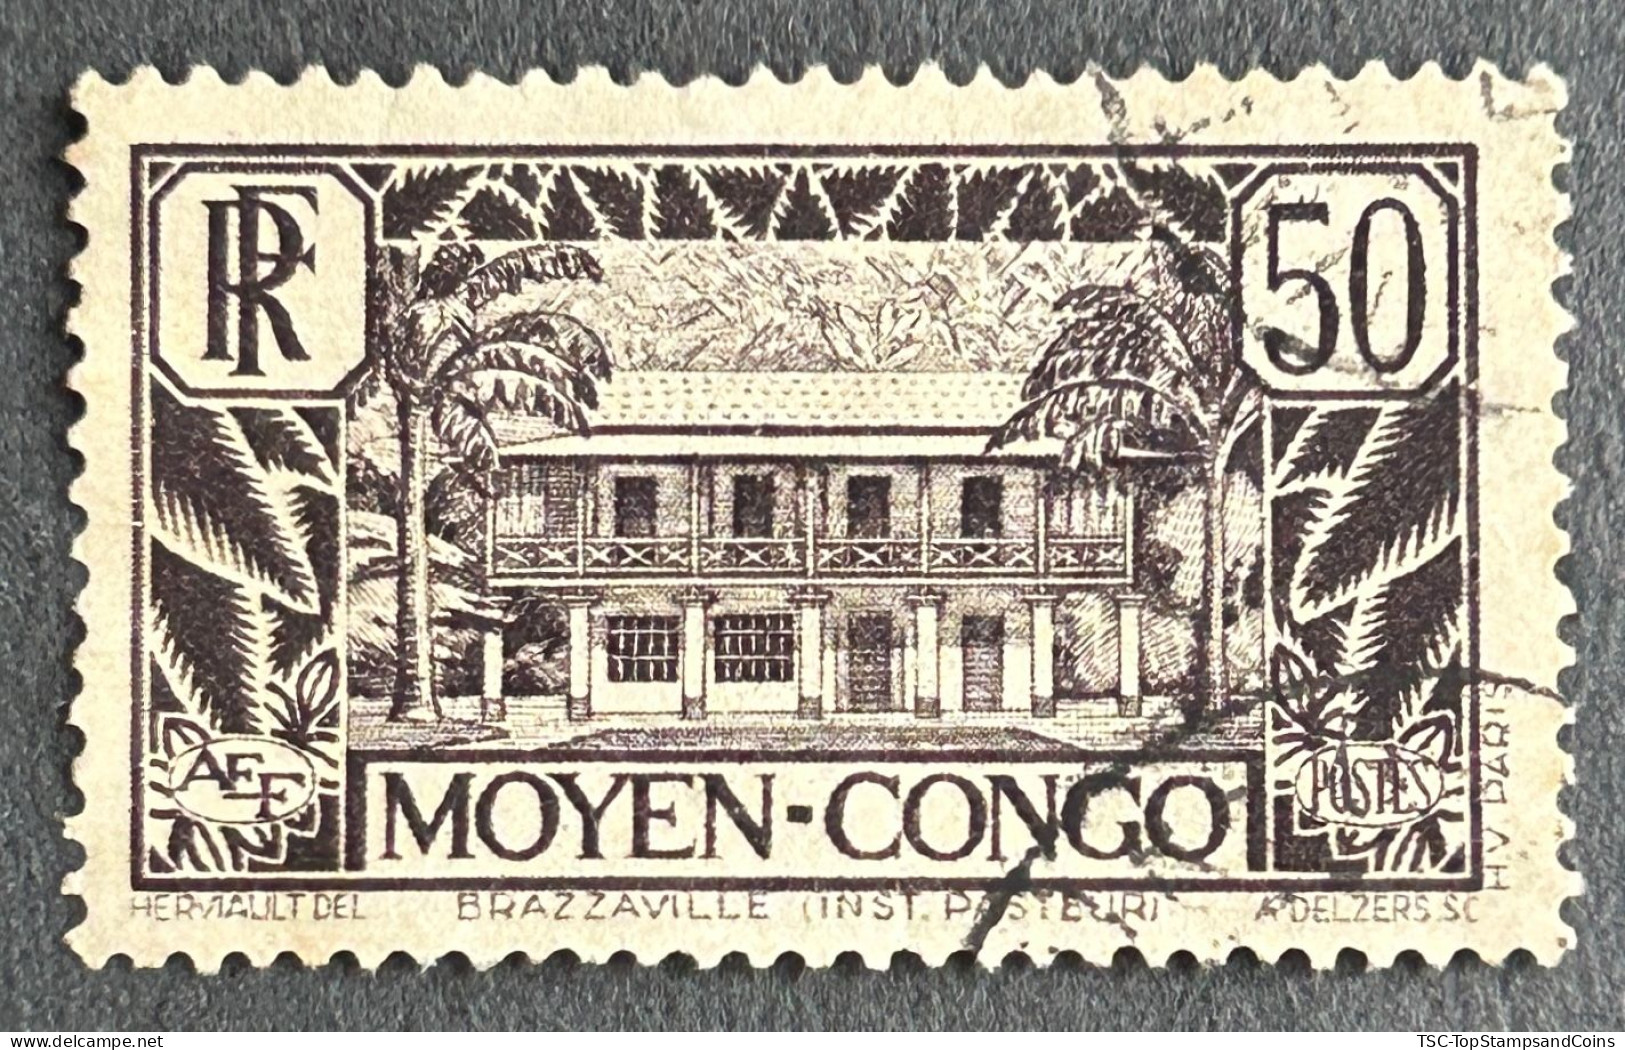 FRCG124U1 - Brazzaville - Pasteur Institute - 50 C Used Stamp - Middle Congo - 1933 - Gebruikt